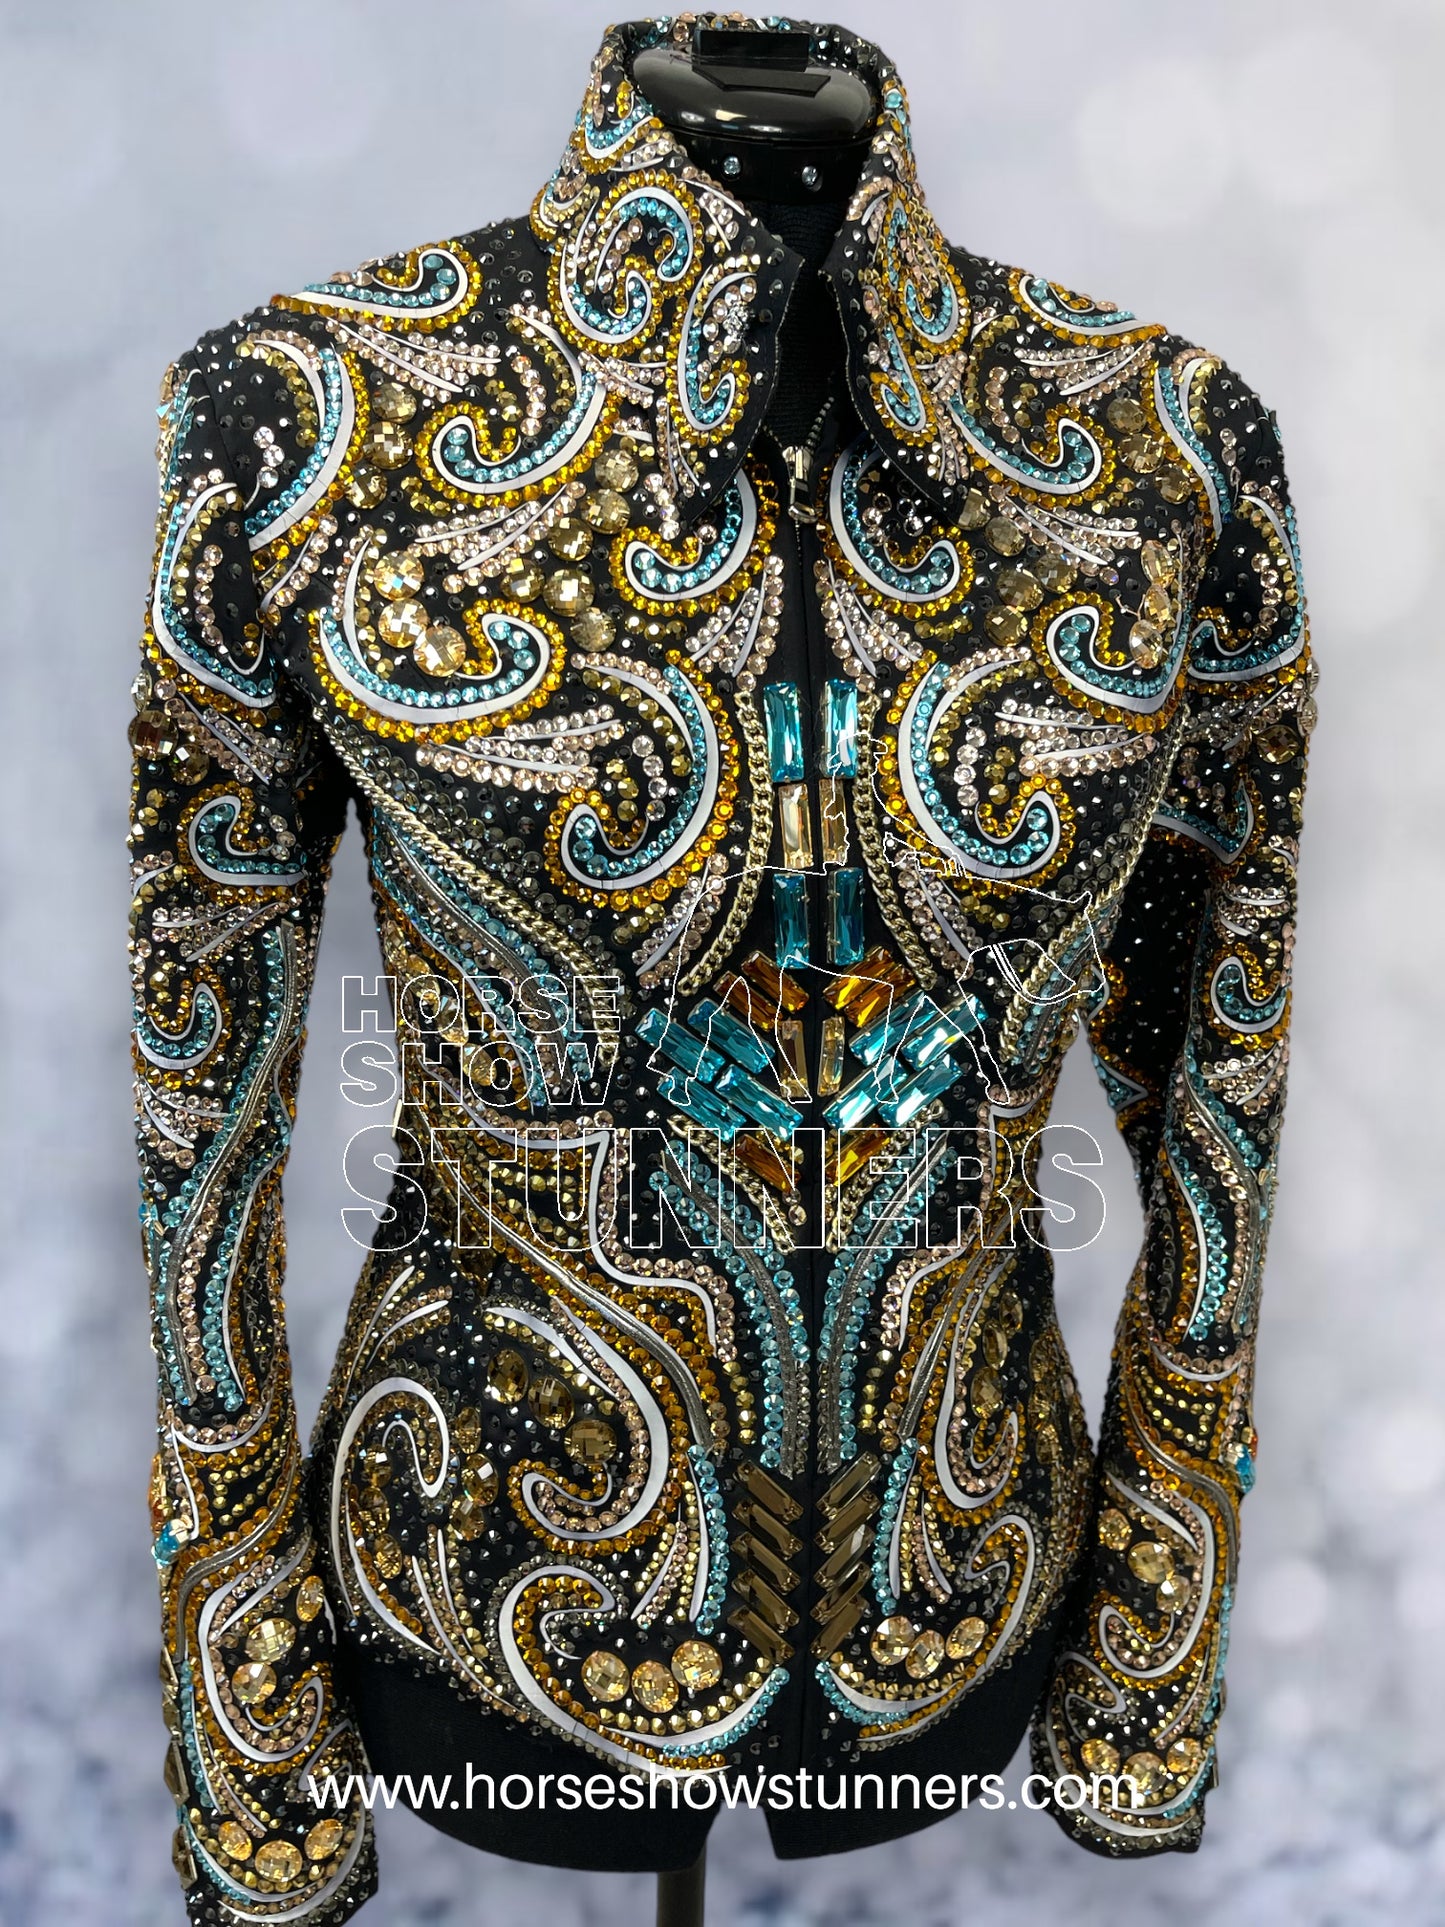 Stile Elegante Jacket #1919